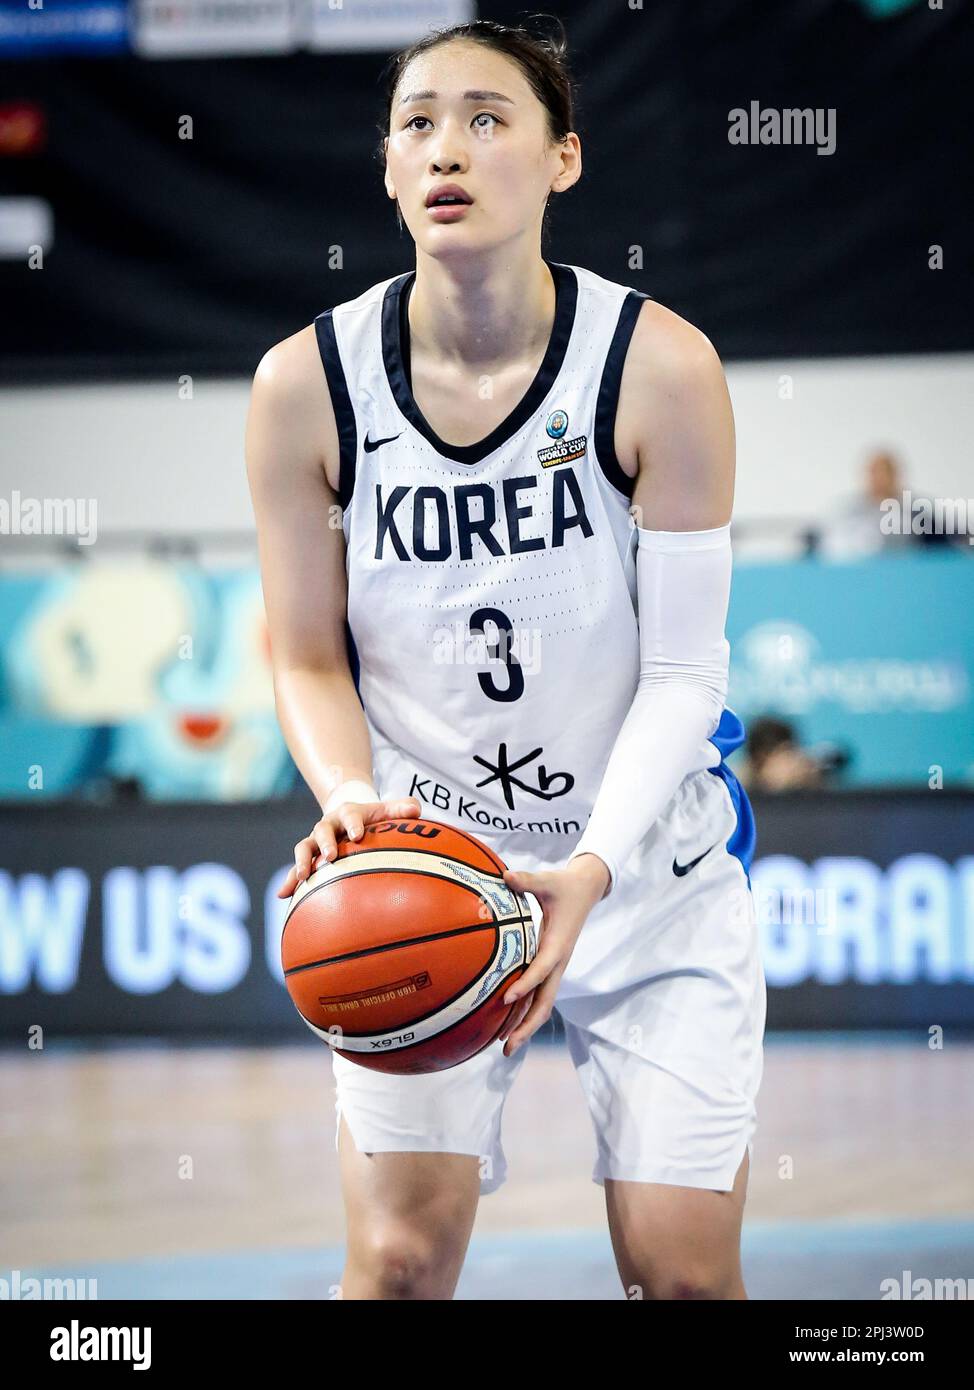 Spain, Tenerife, September 25, 2018: Korean female basketball player Leeseul Kang during the Women's Basketball World Cup Stock Photo